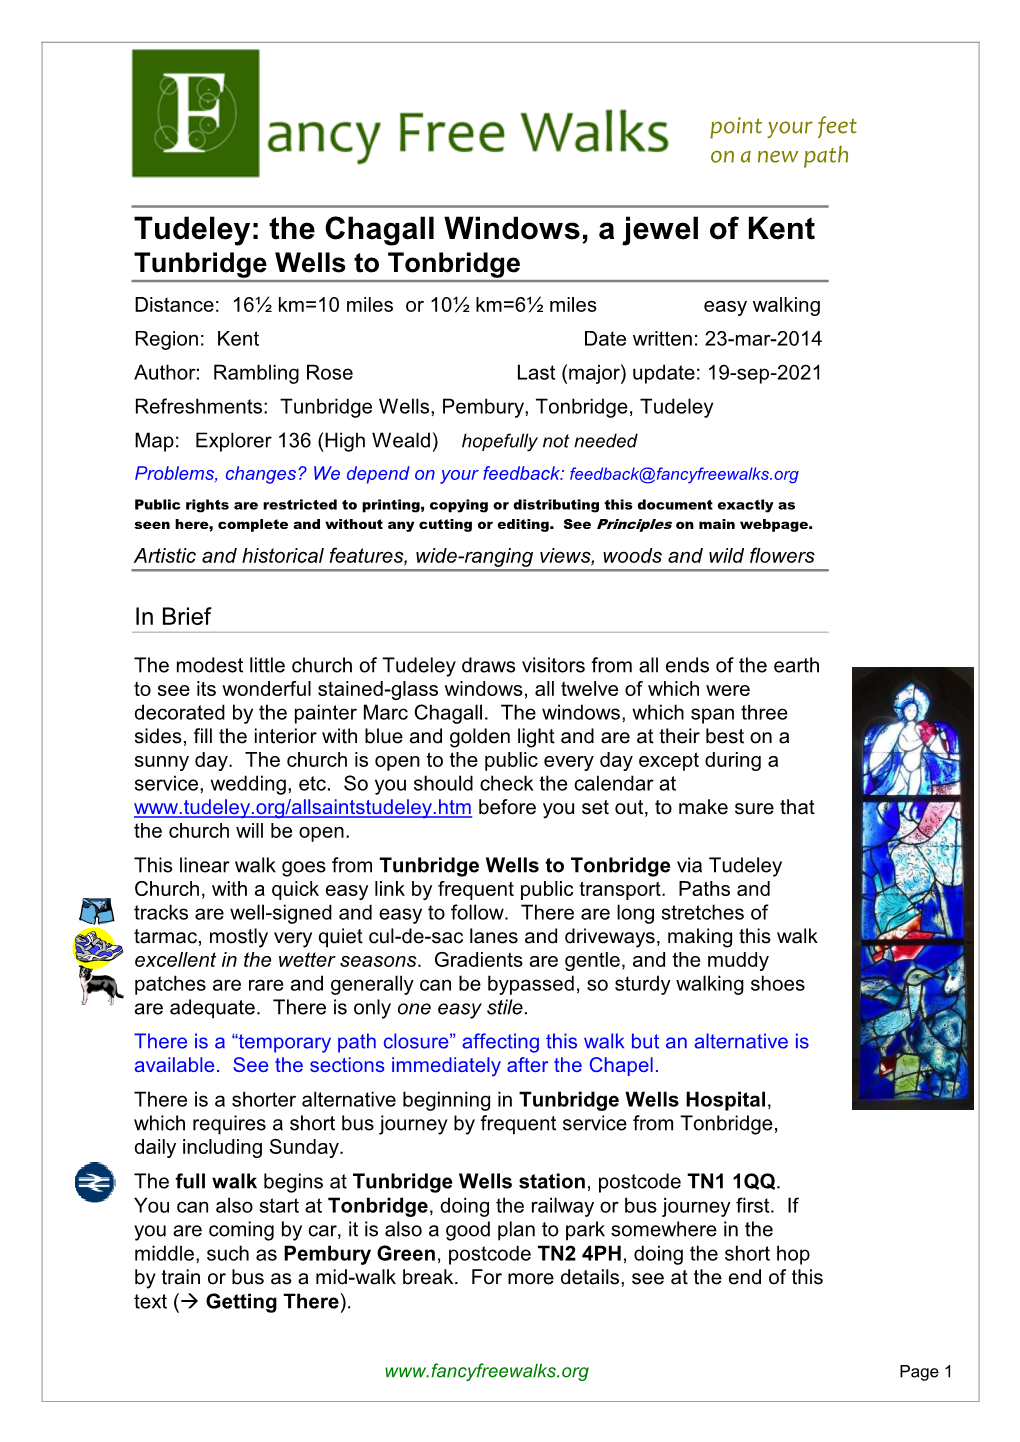 Tudeley: the Chagall Windows, a Jewel of Kent Tunbridge Wells to Tonbridge